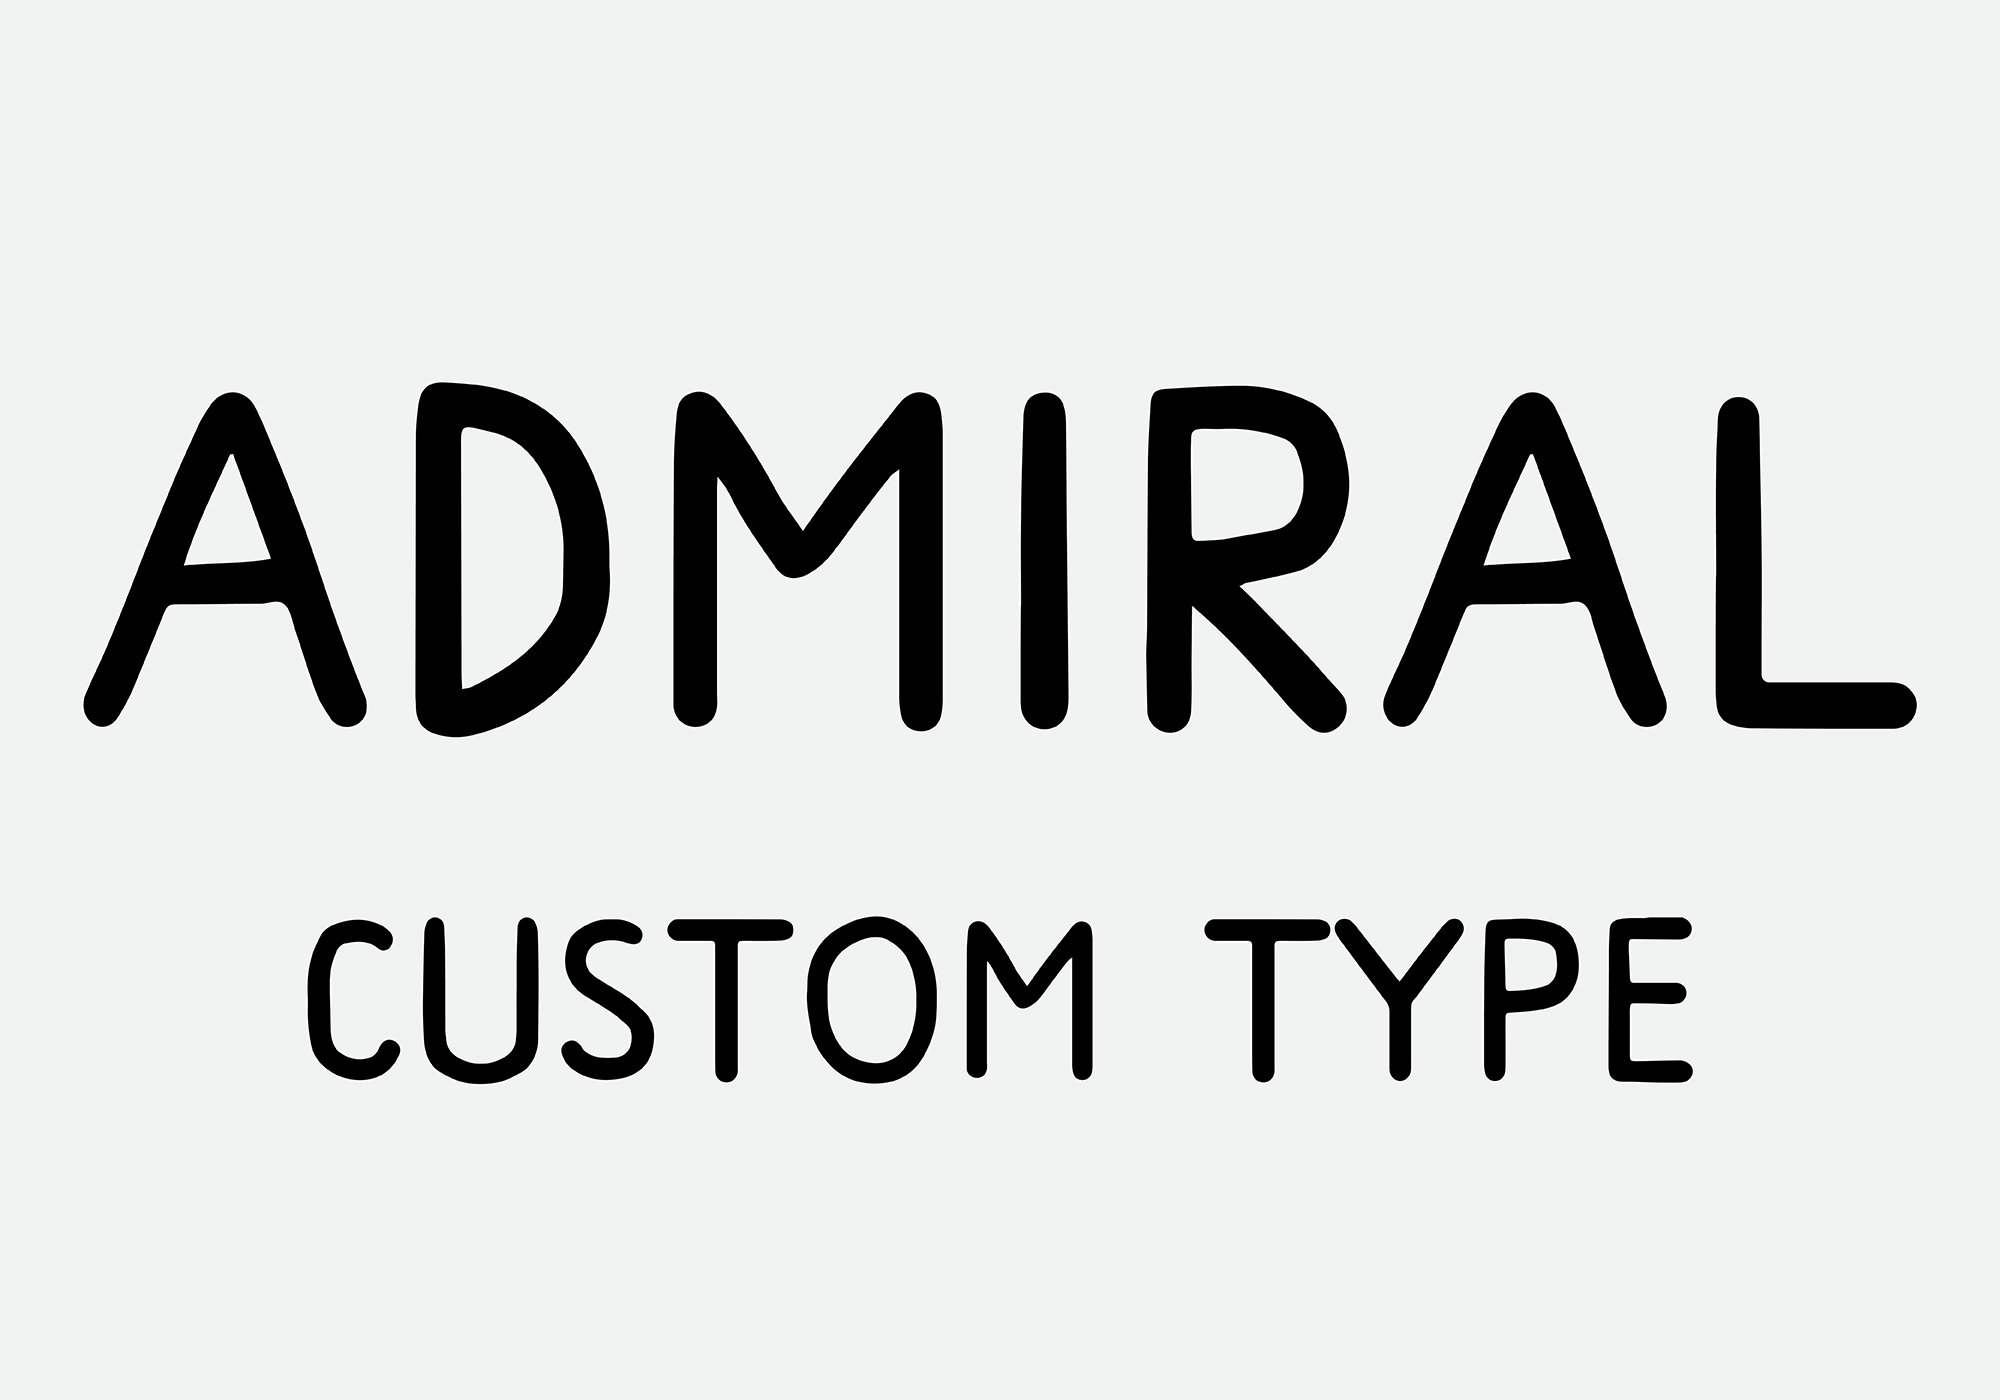 Custom Type for Admiral Films Animation Studio